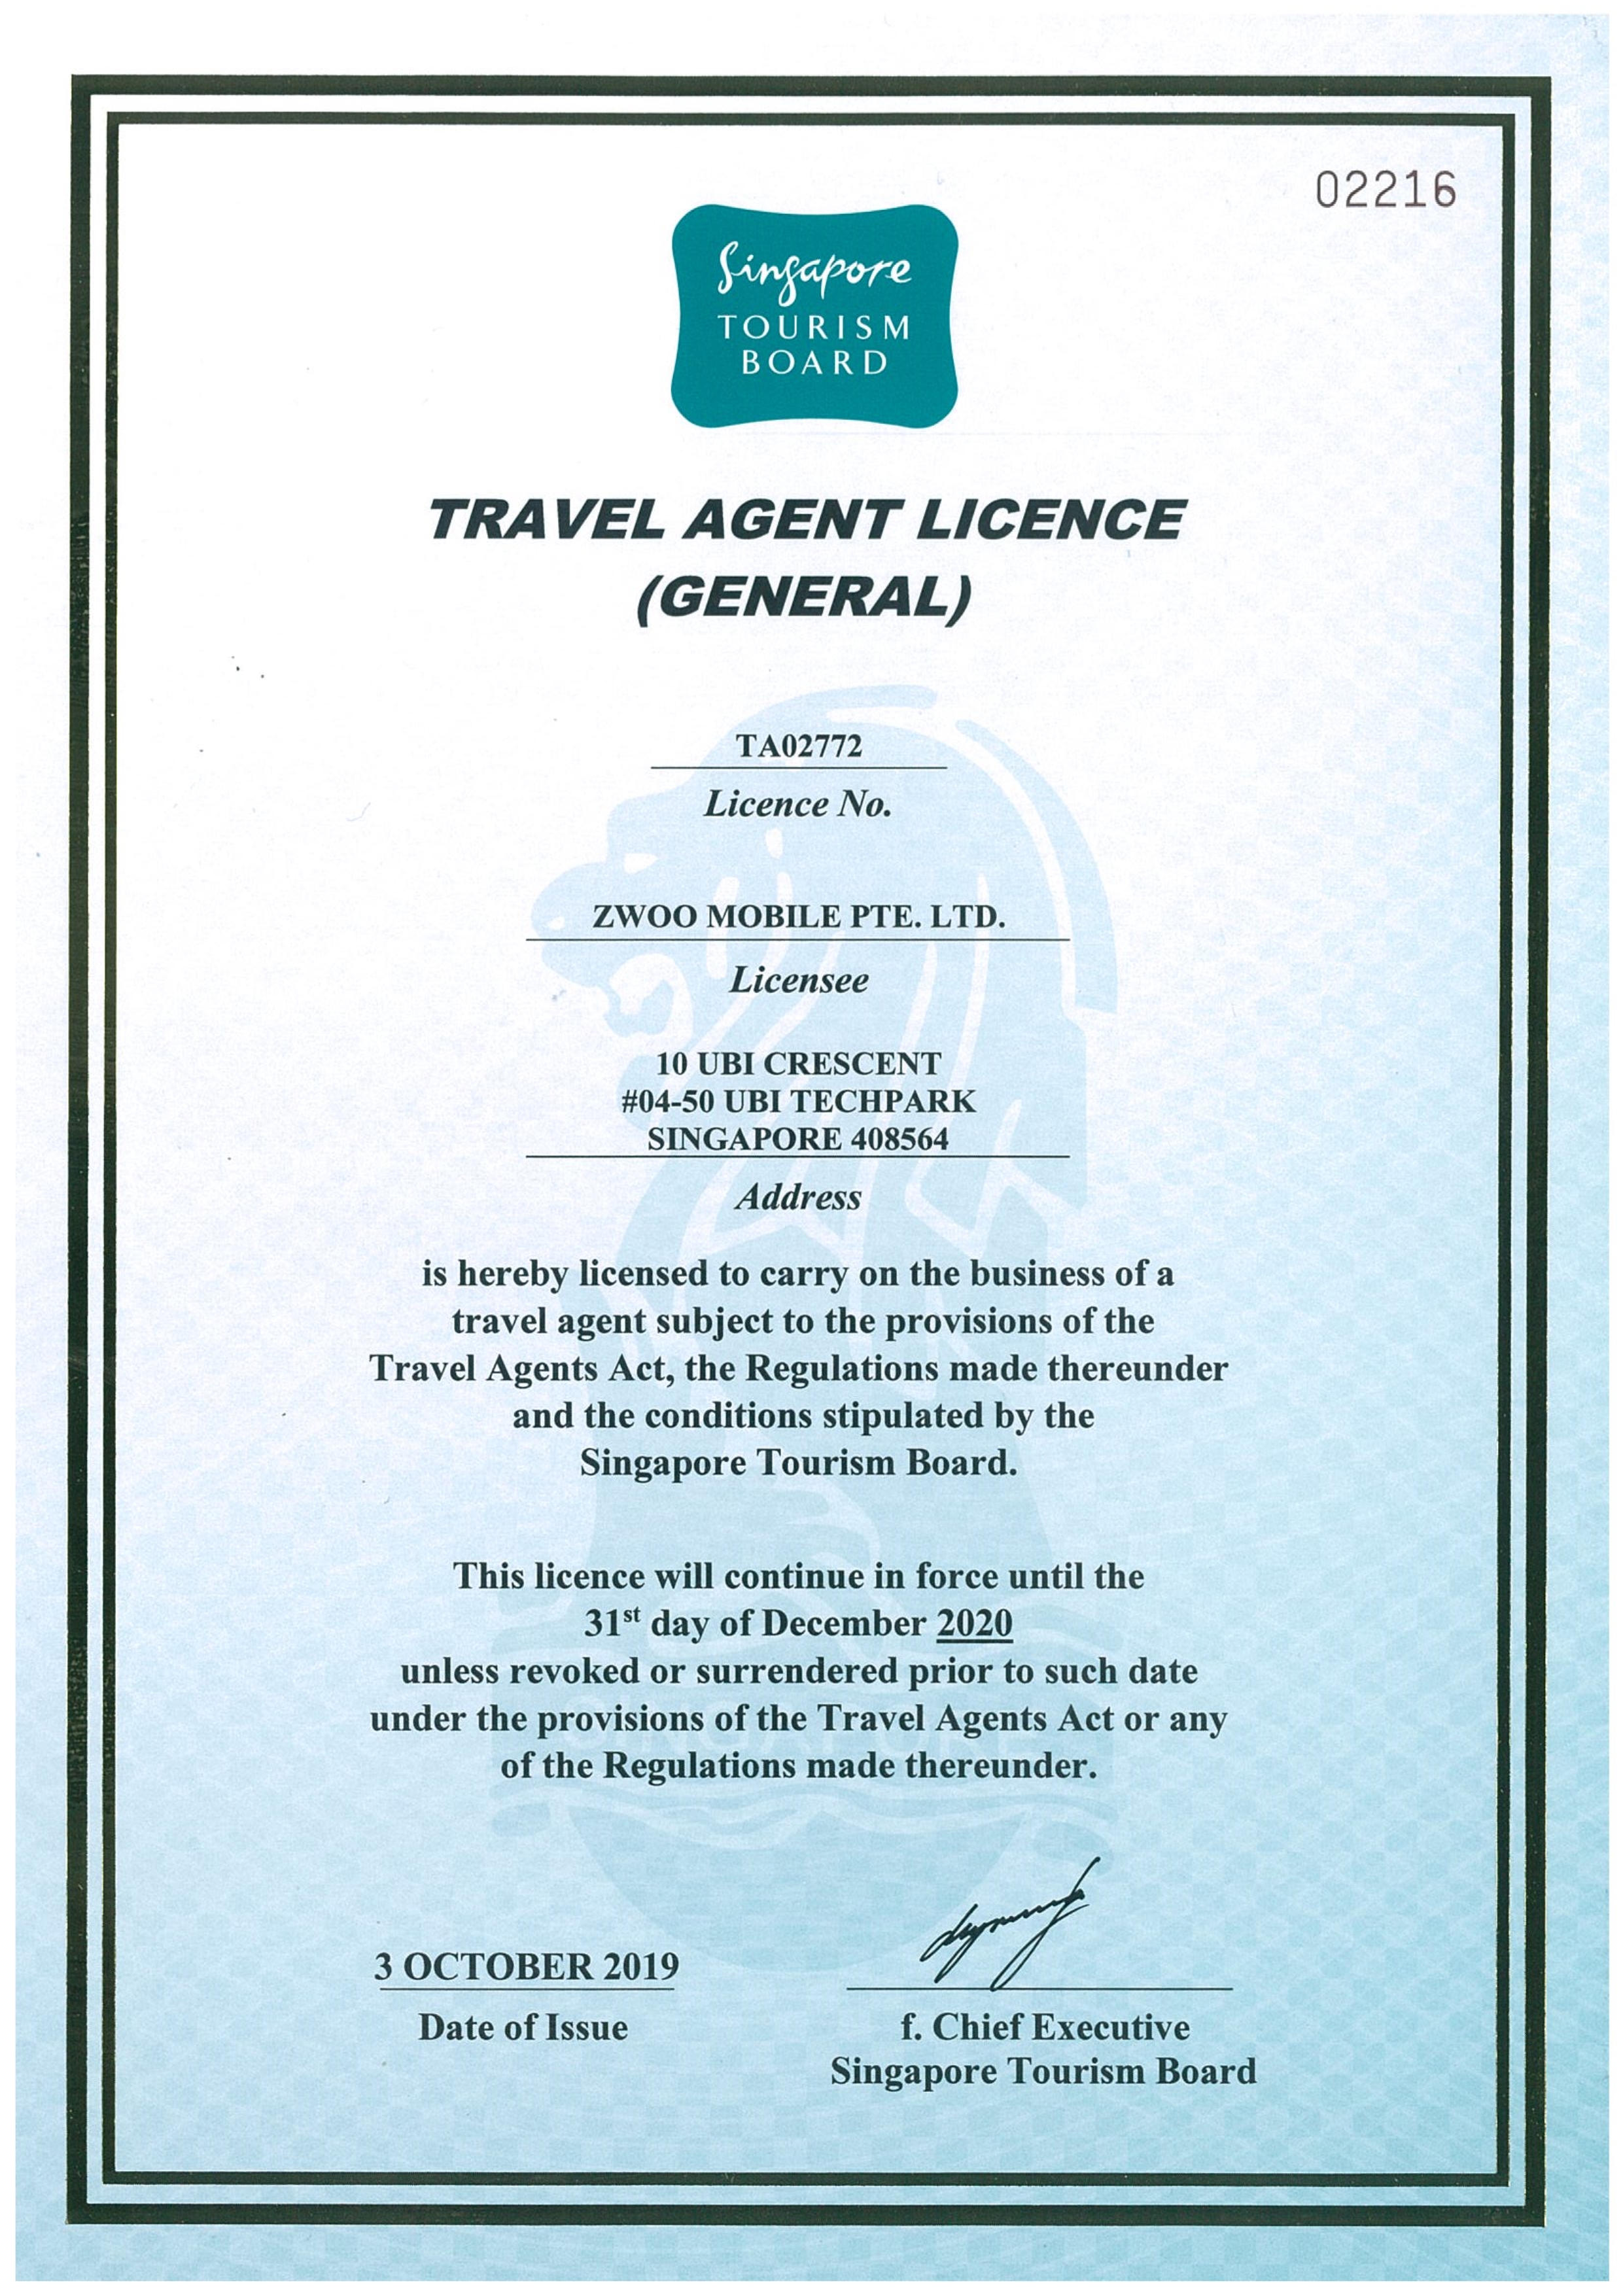 singapore tourism board travel agent license